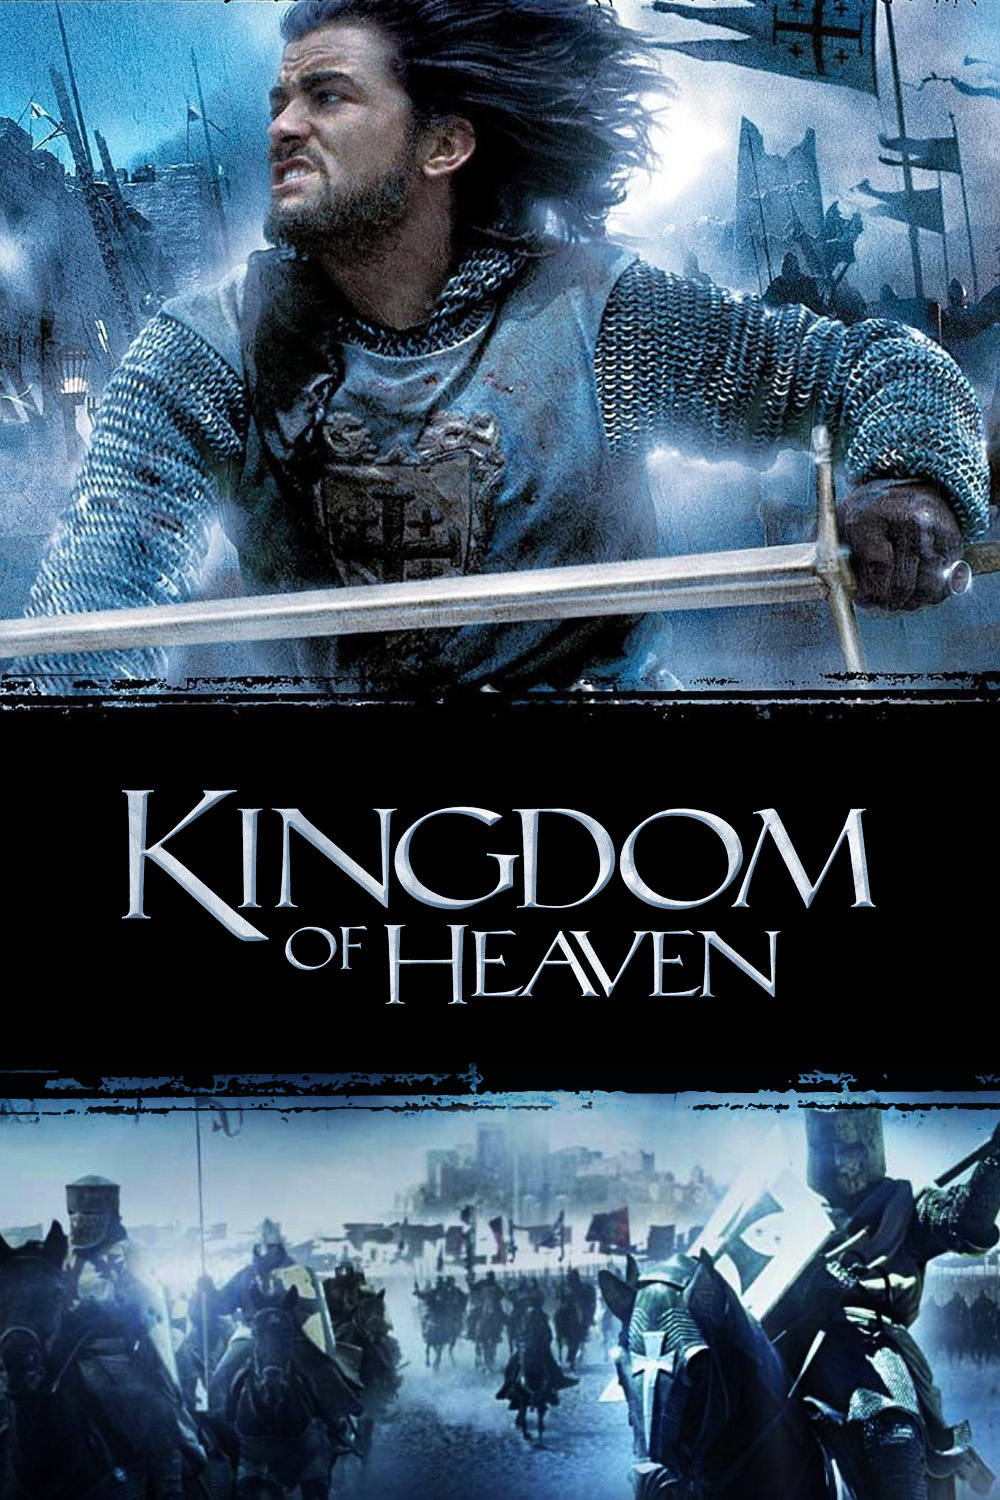 Kingdom of Heaven – Decent, even quite good but depressing movie